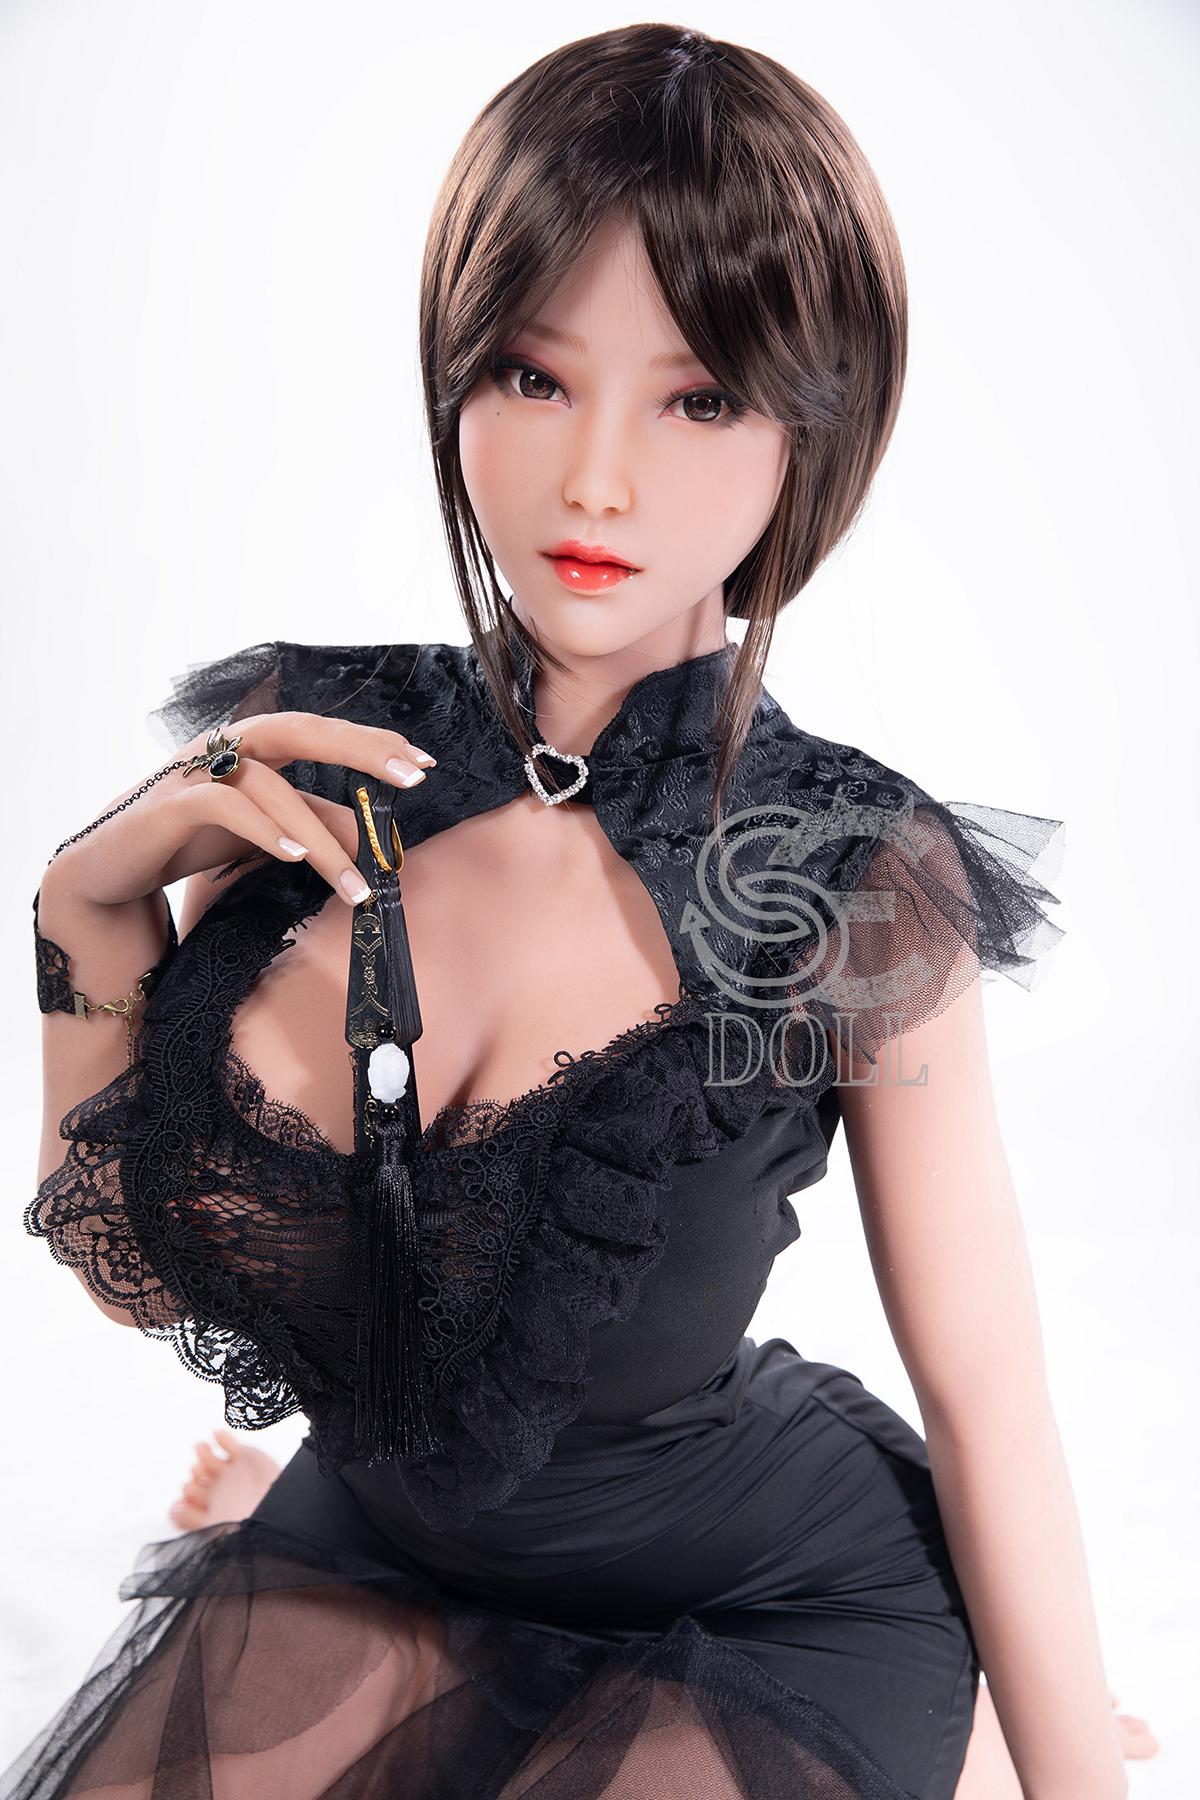 Masami Love Doll Cosplay Japanese Look